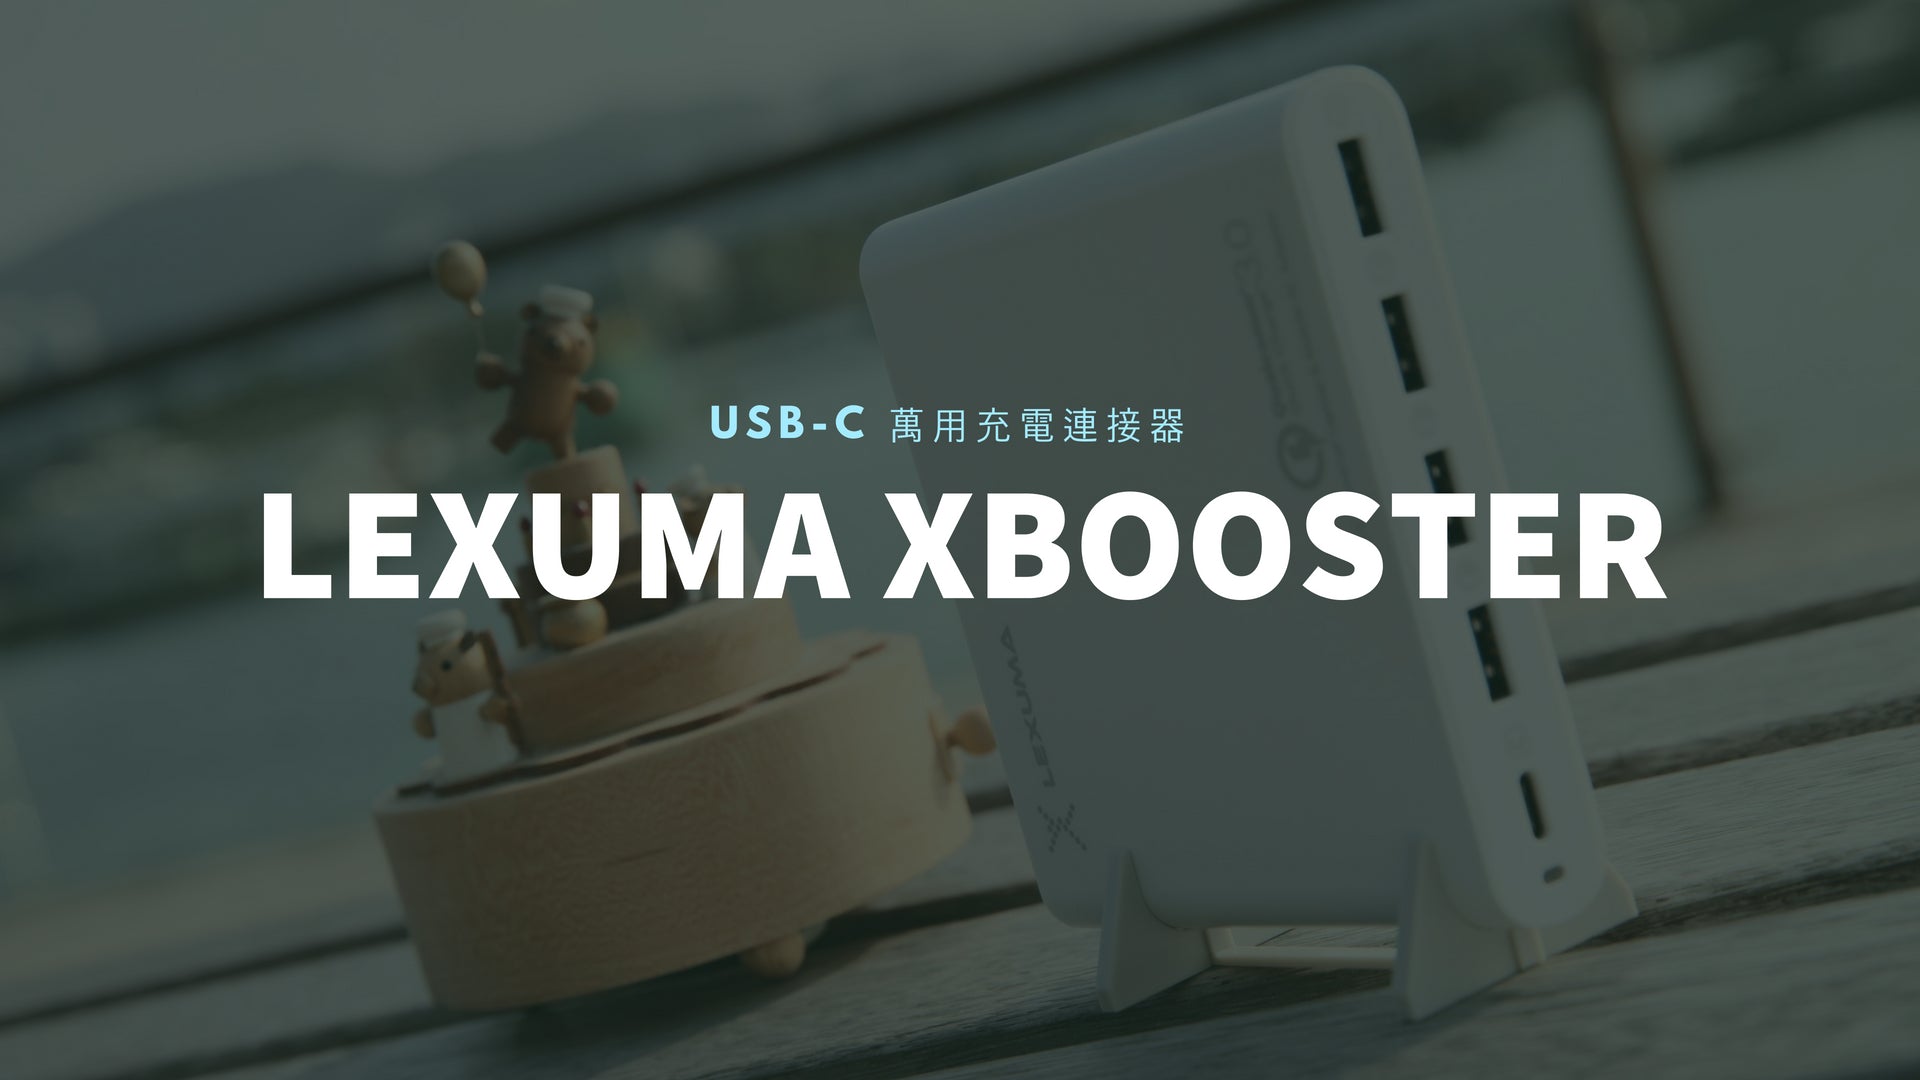 Lexuma辣數碼 XBooster - 80W USB-C 萬用充電連接器